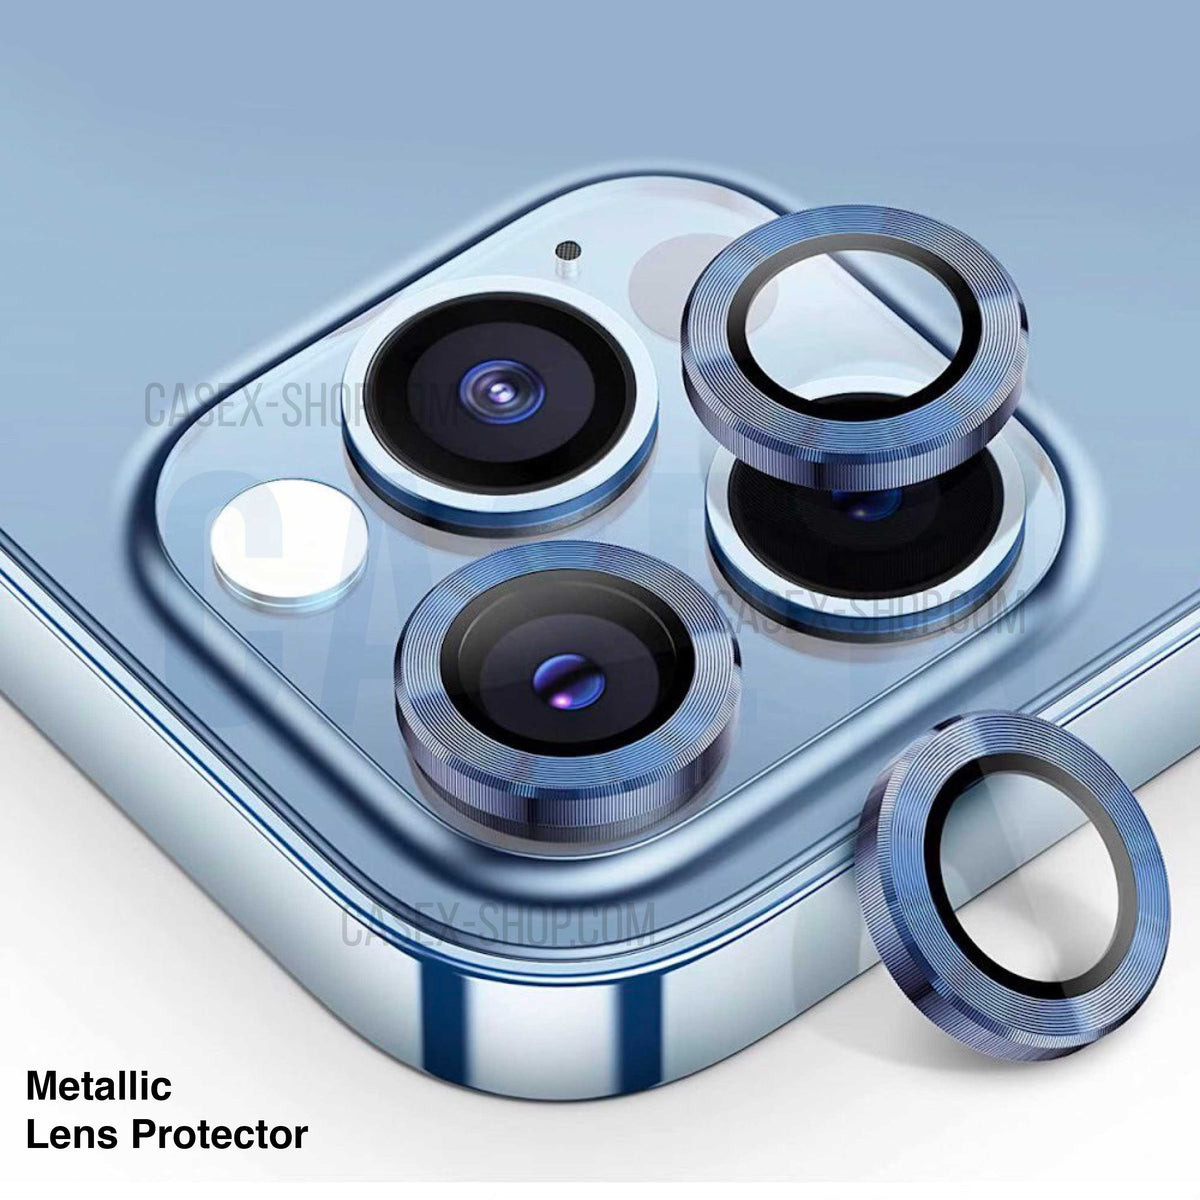 Sierra Blue Ring Lens Protector